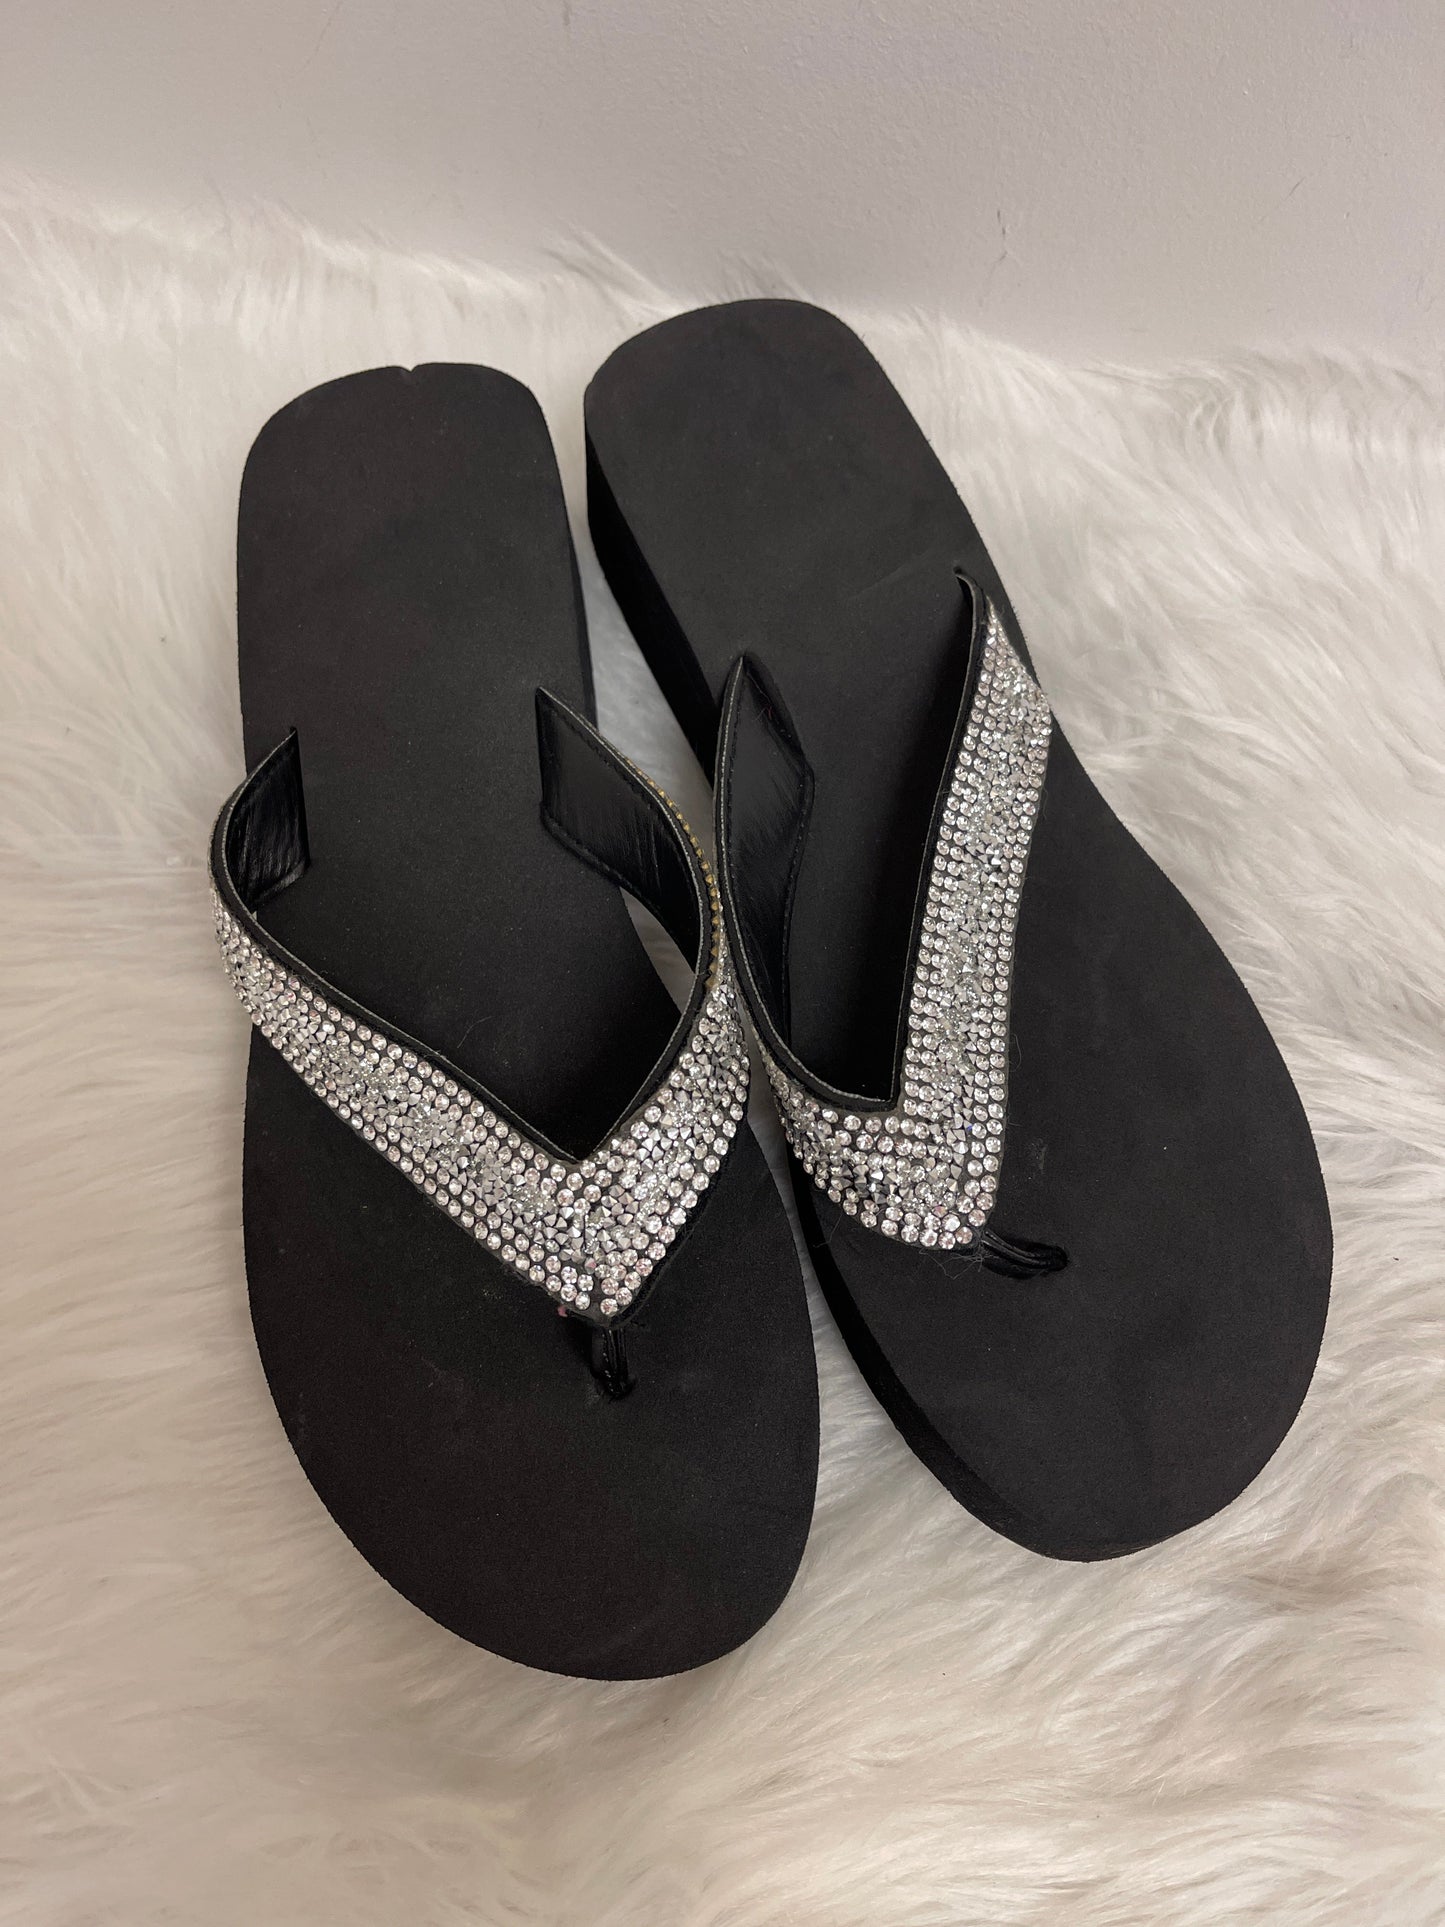 Black Sandals Flip Flops Clothes Mentor, Size 11